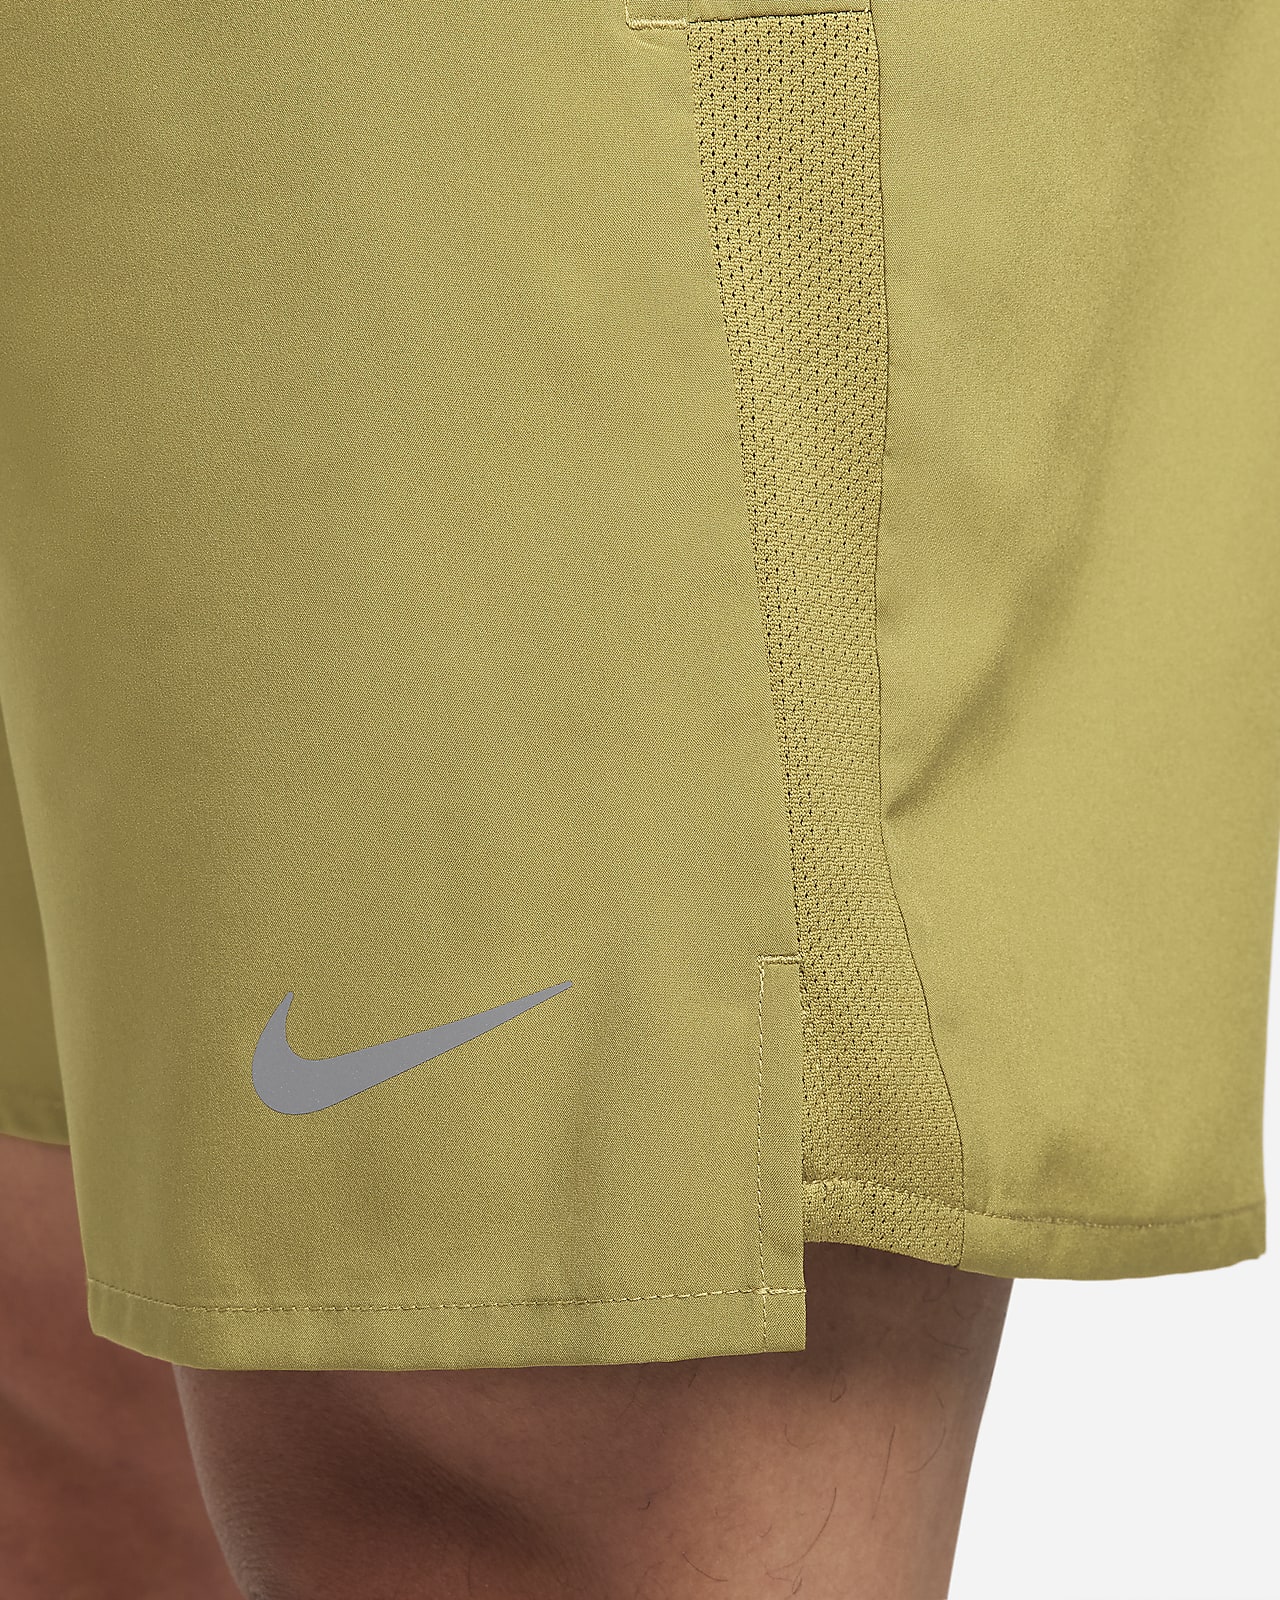 Nike Challenger Men's Brief-Lined Running Shorts